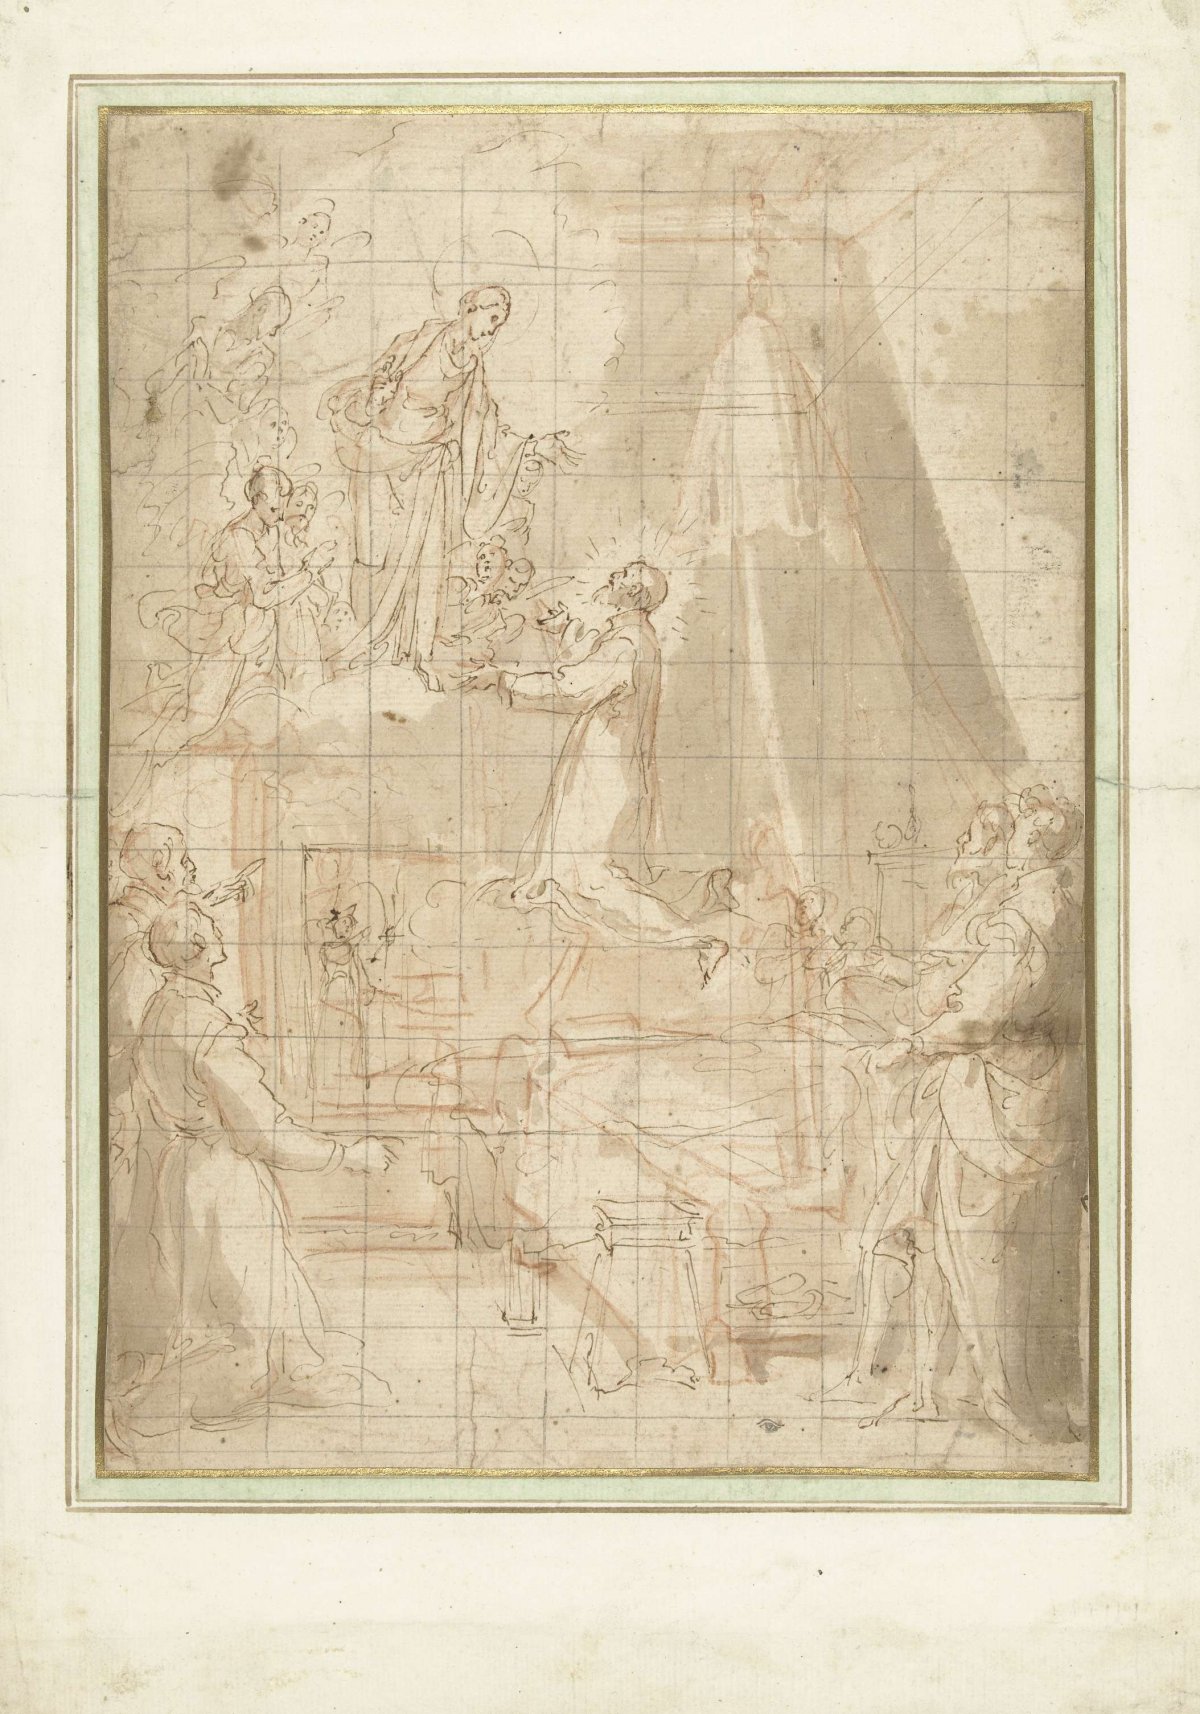 Virgin Mary appears to St. Filippo Neri, Bernardino Poccetti, 1558 - 1612